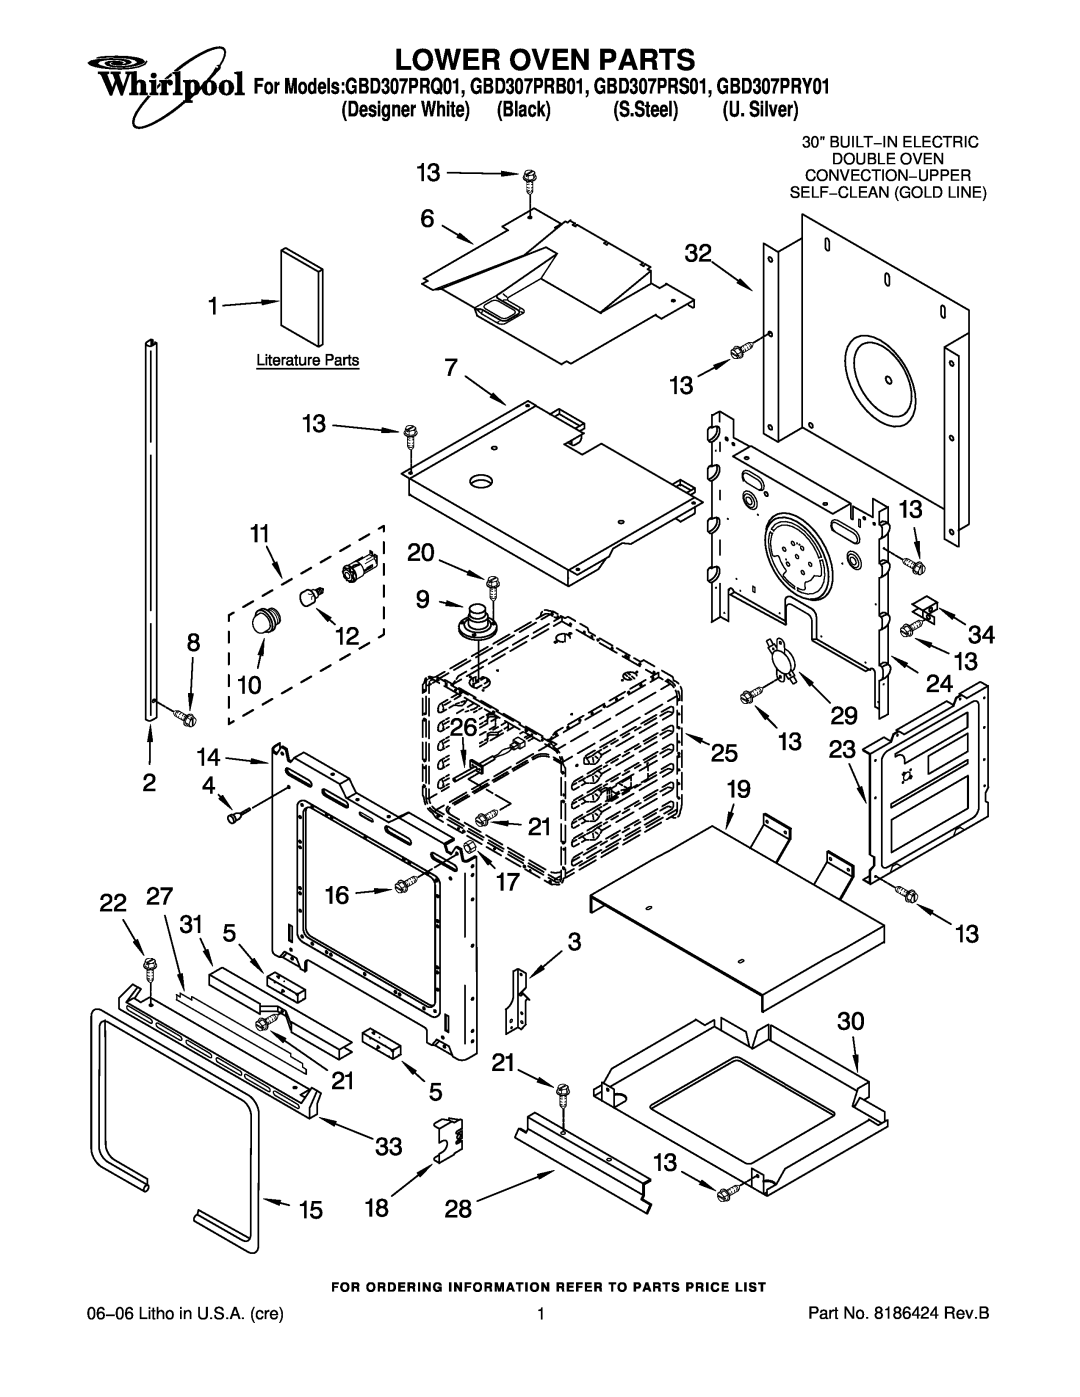 Whirlpool manual Lower Oven Parts, For ModelsGBD307PRQ01, GBD307PRB01, GBD307PRS01, GBD307PRY01, Black, S.Steel 